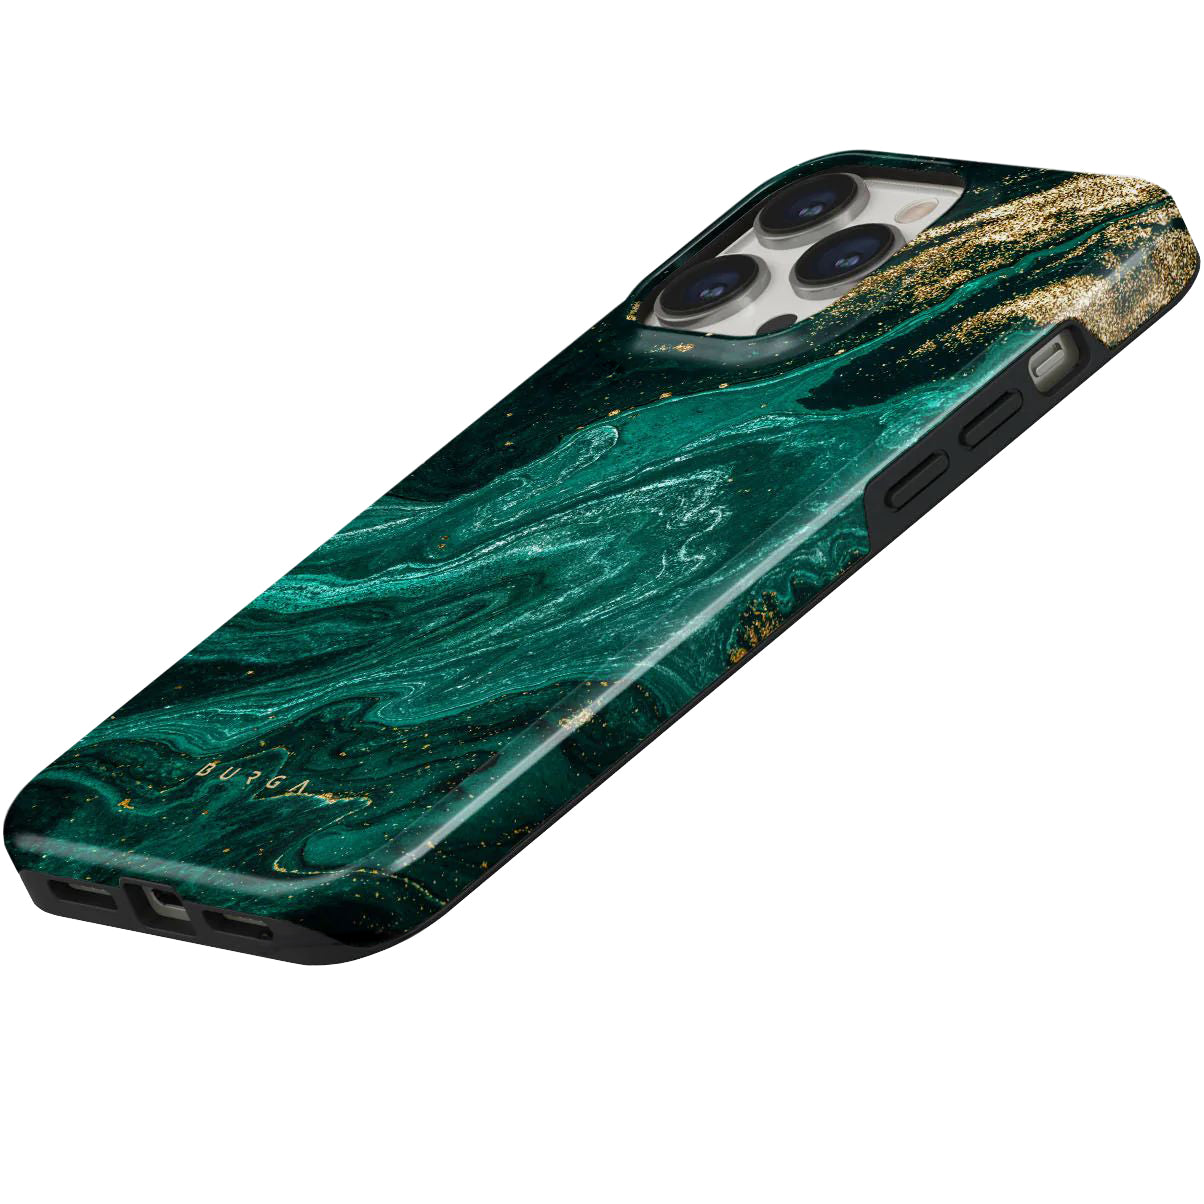 Schutzhülle für Apple iPhone 14 Pro, Burga Emerald Pool Tough Magsafe, Mehrfarbig marine